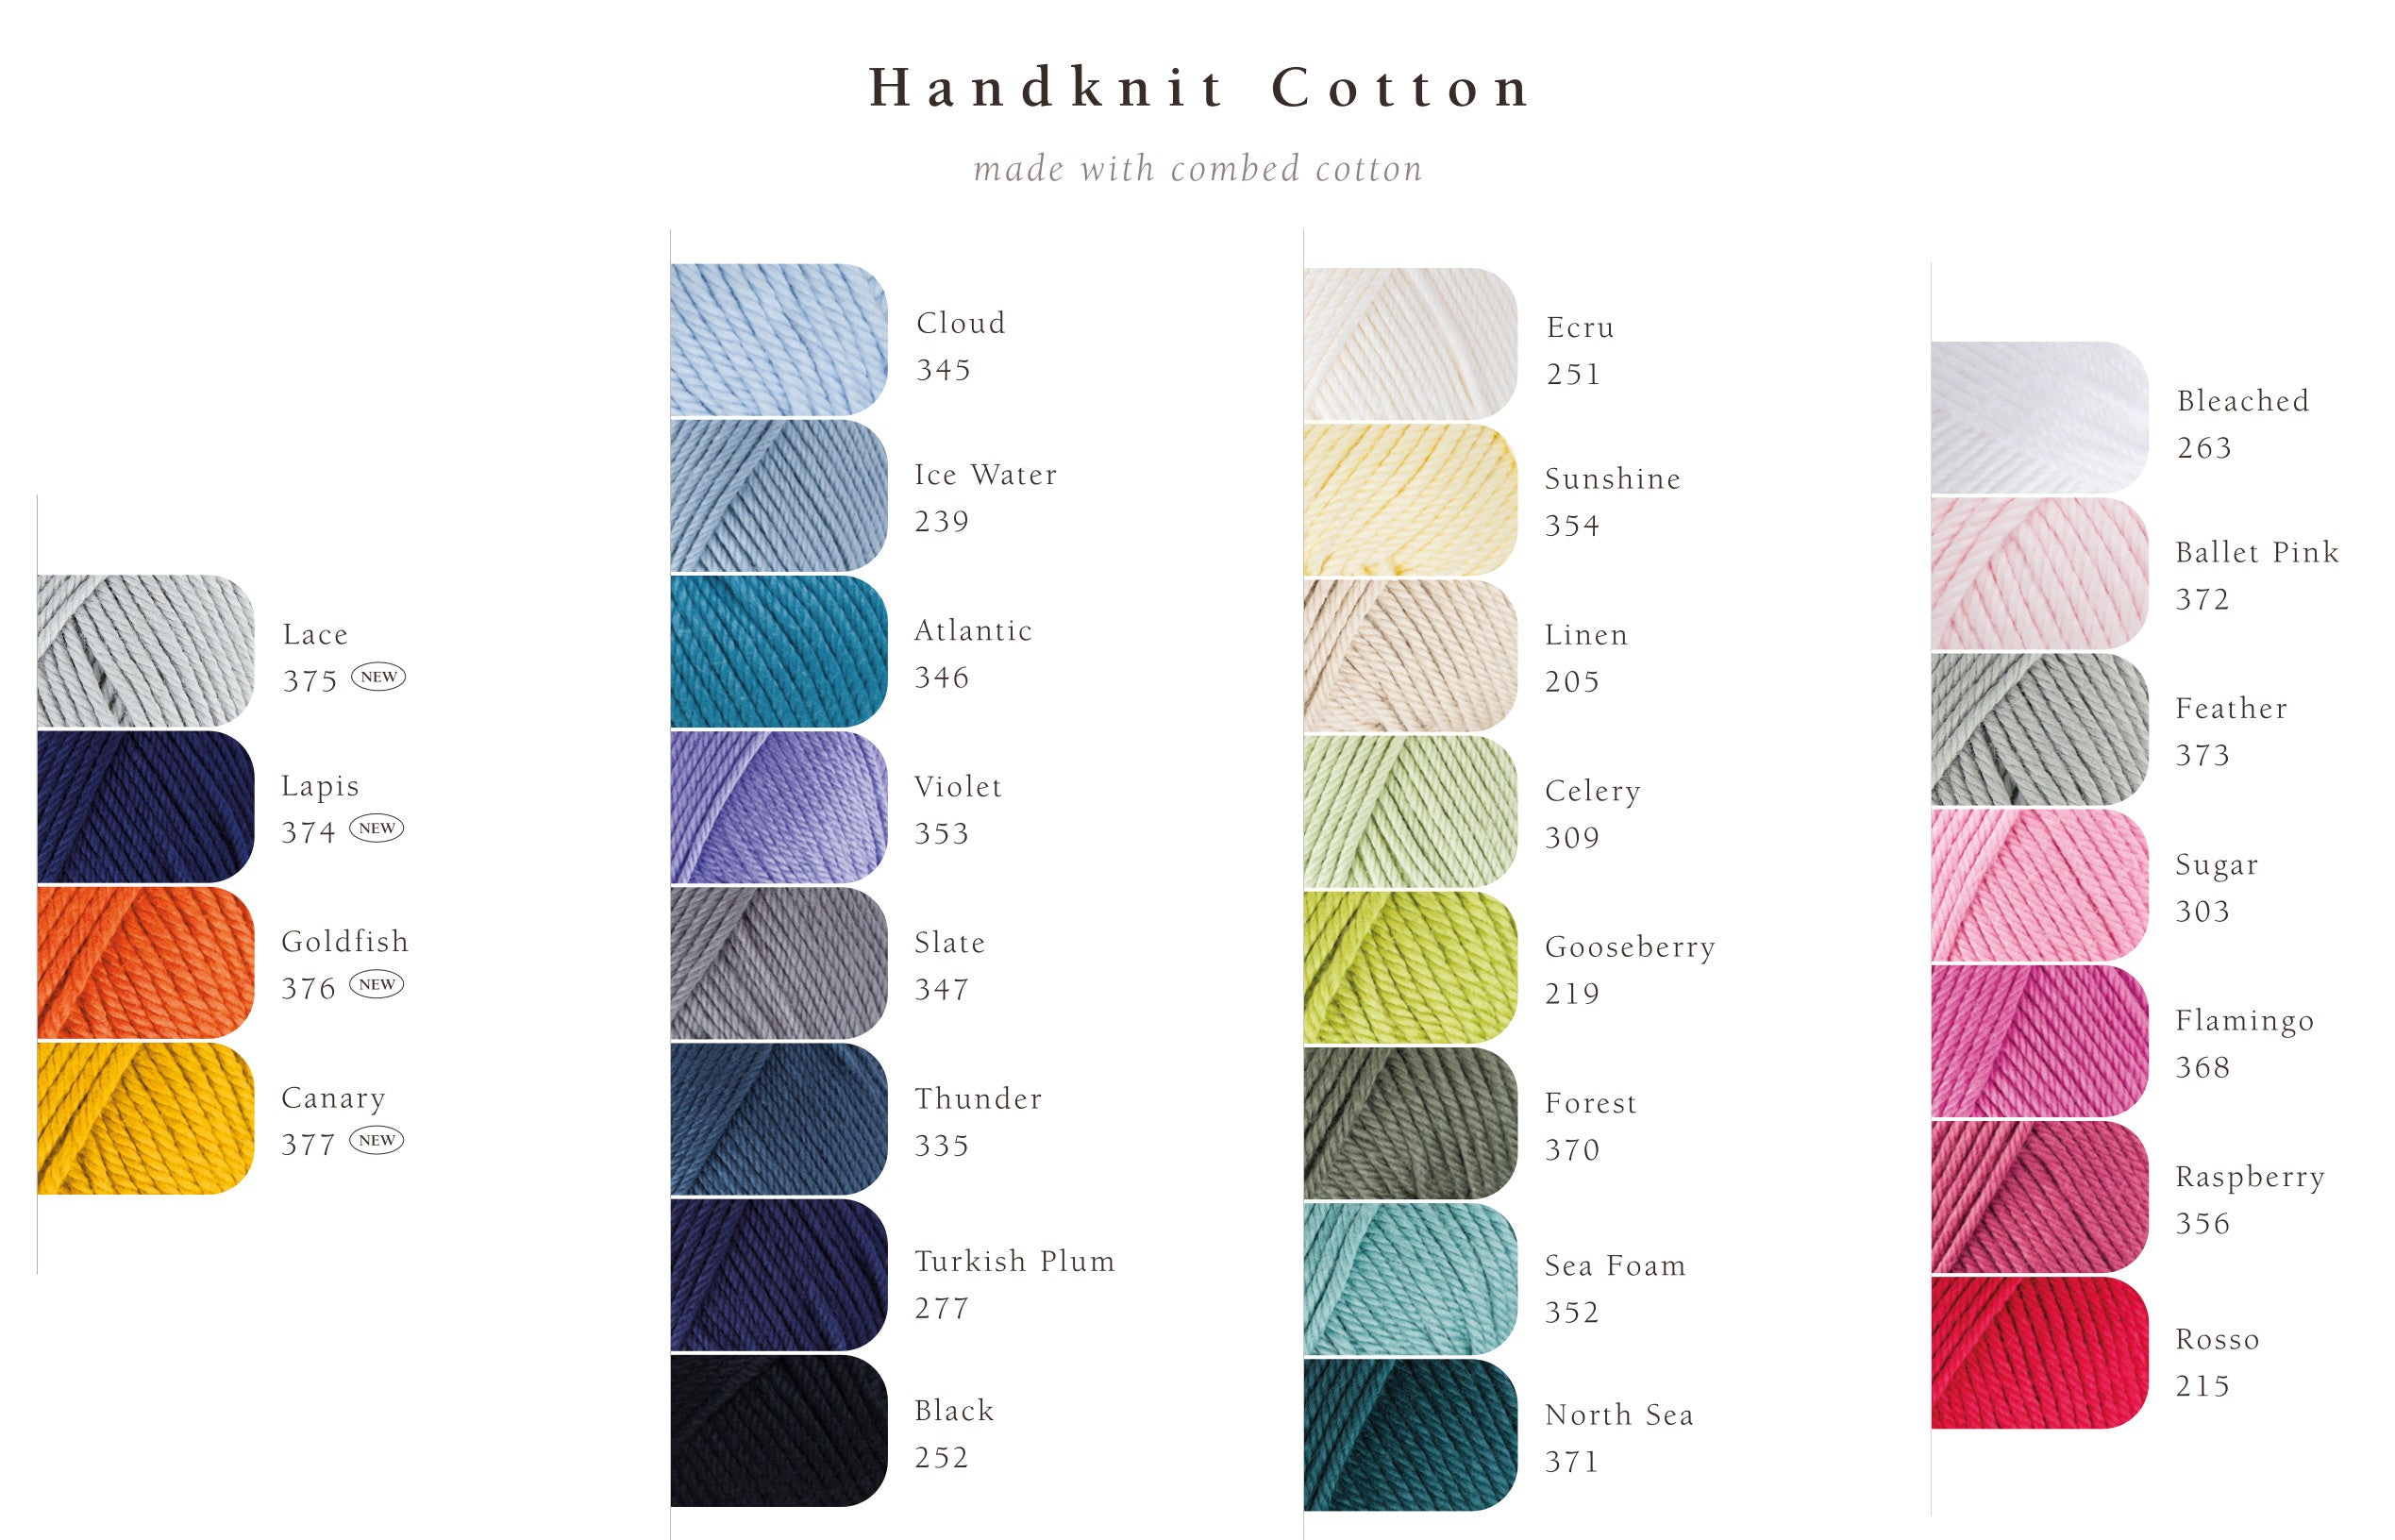 Rowan Handknit Cotton – Wool and Company